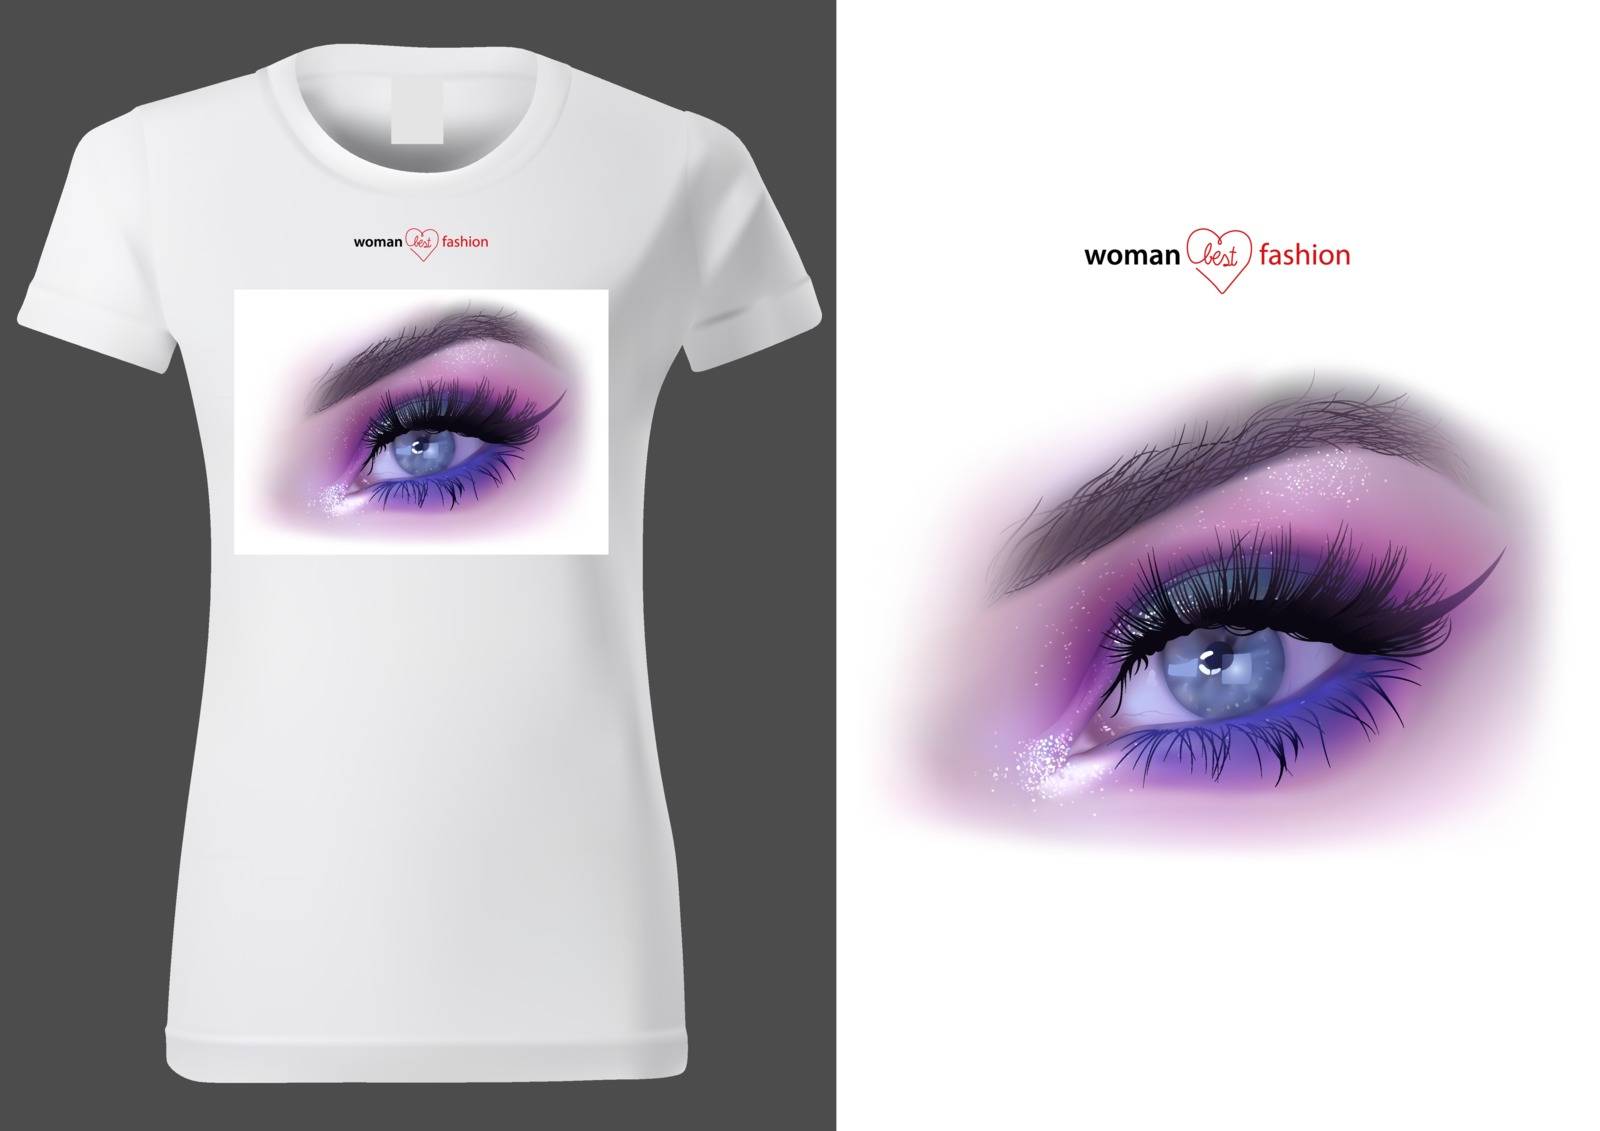 Women White T-shirt Design with Makeup Eye by illustratorCZ